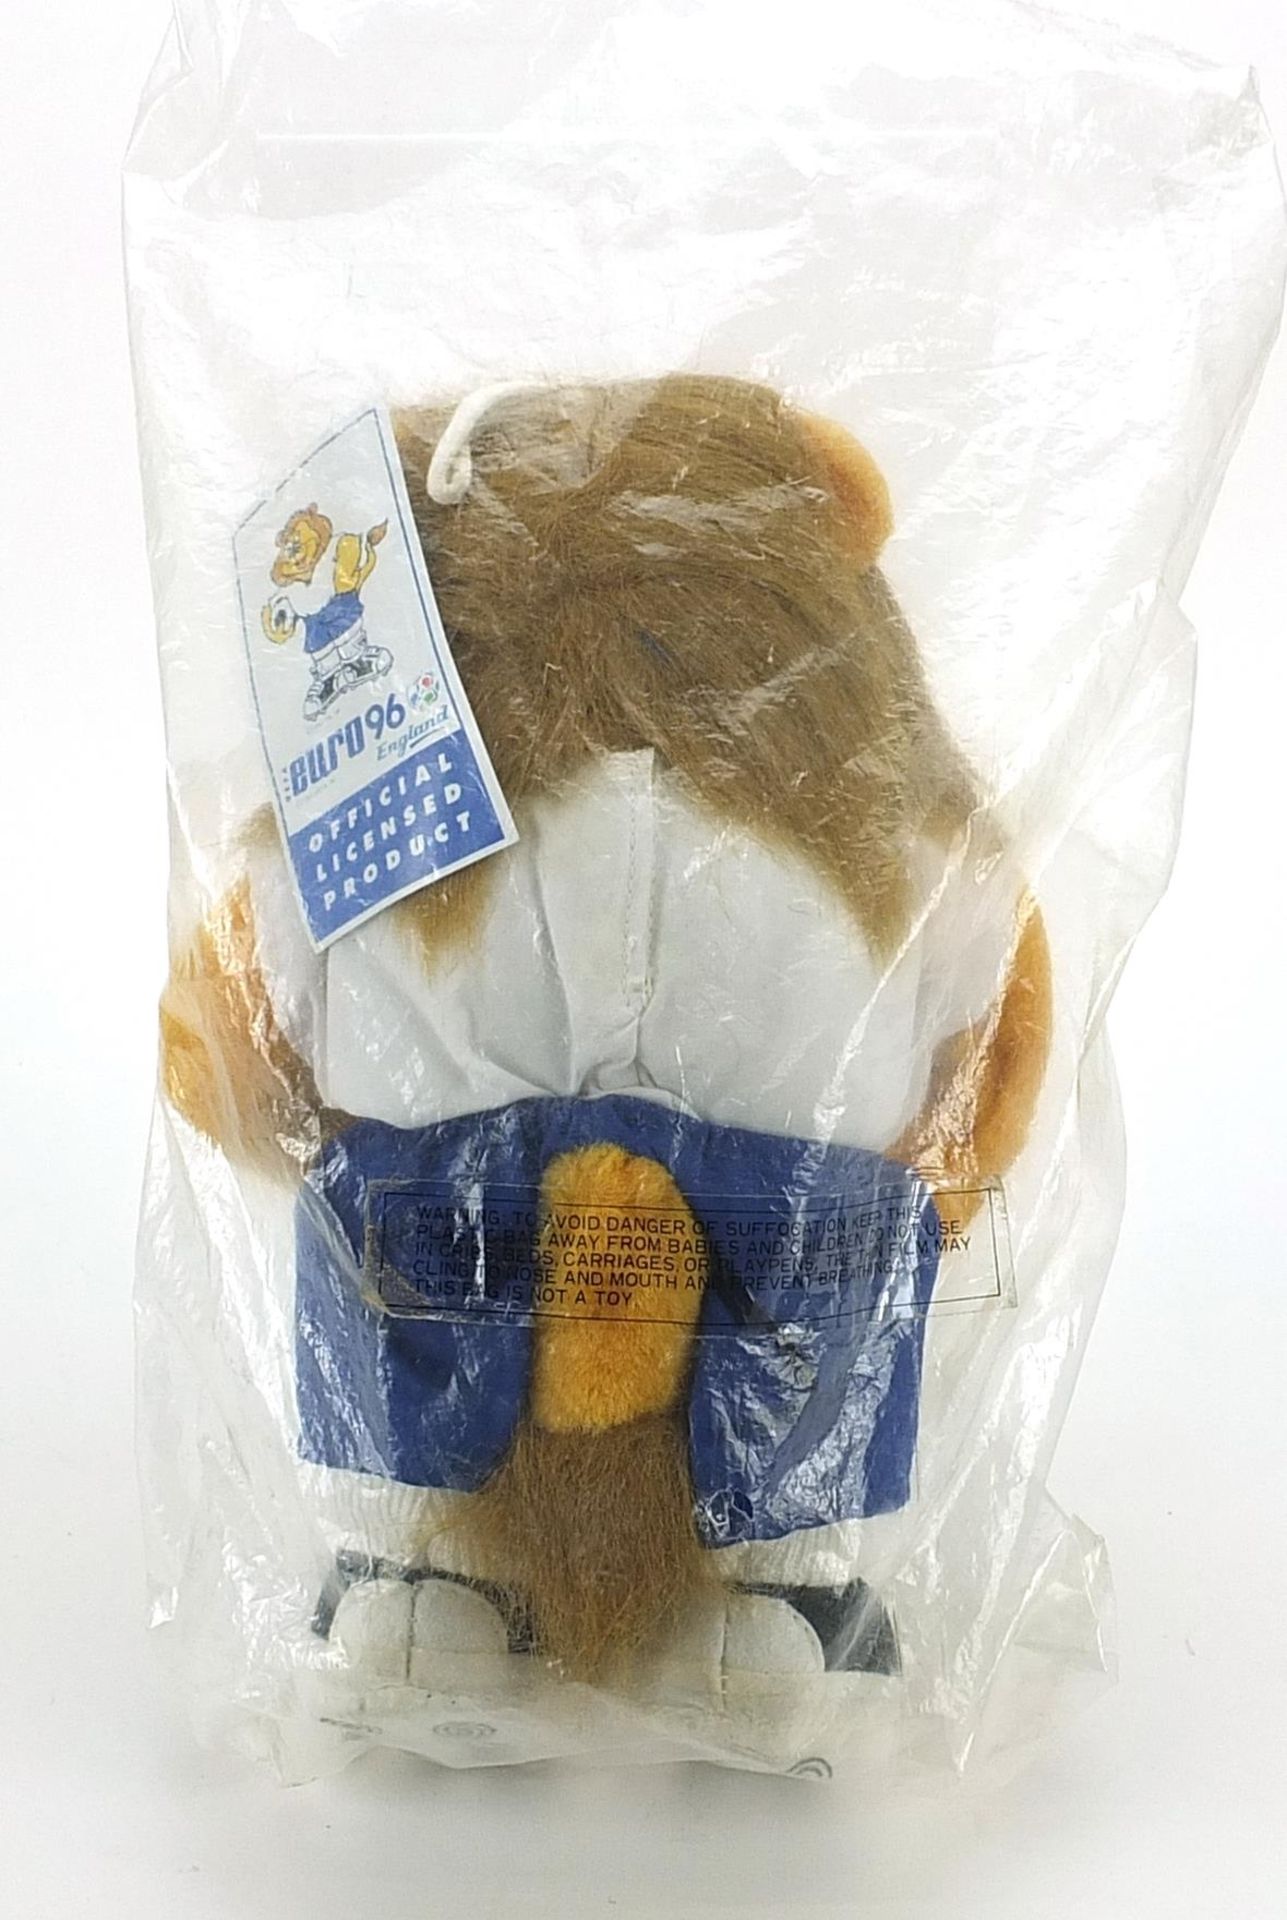 Sealed UEFA Euro 96 England Official Goliath Lion teddy bear, 30cm high - Image 2 of 3